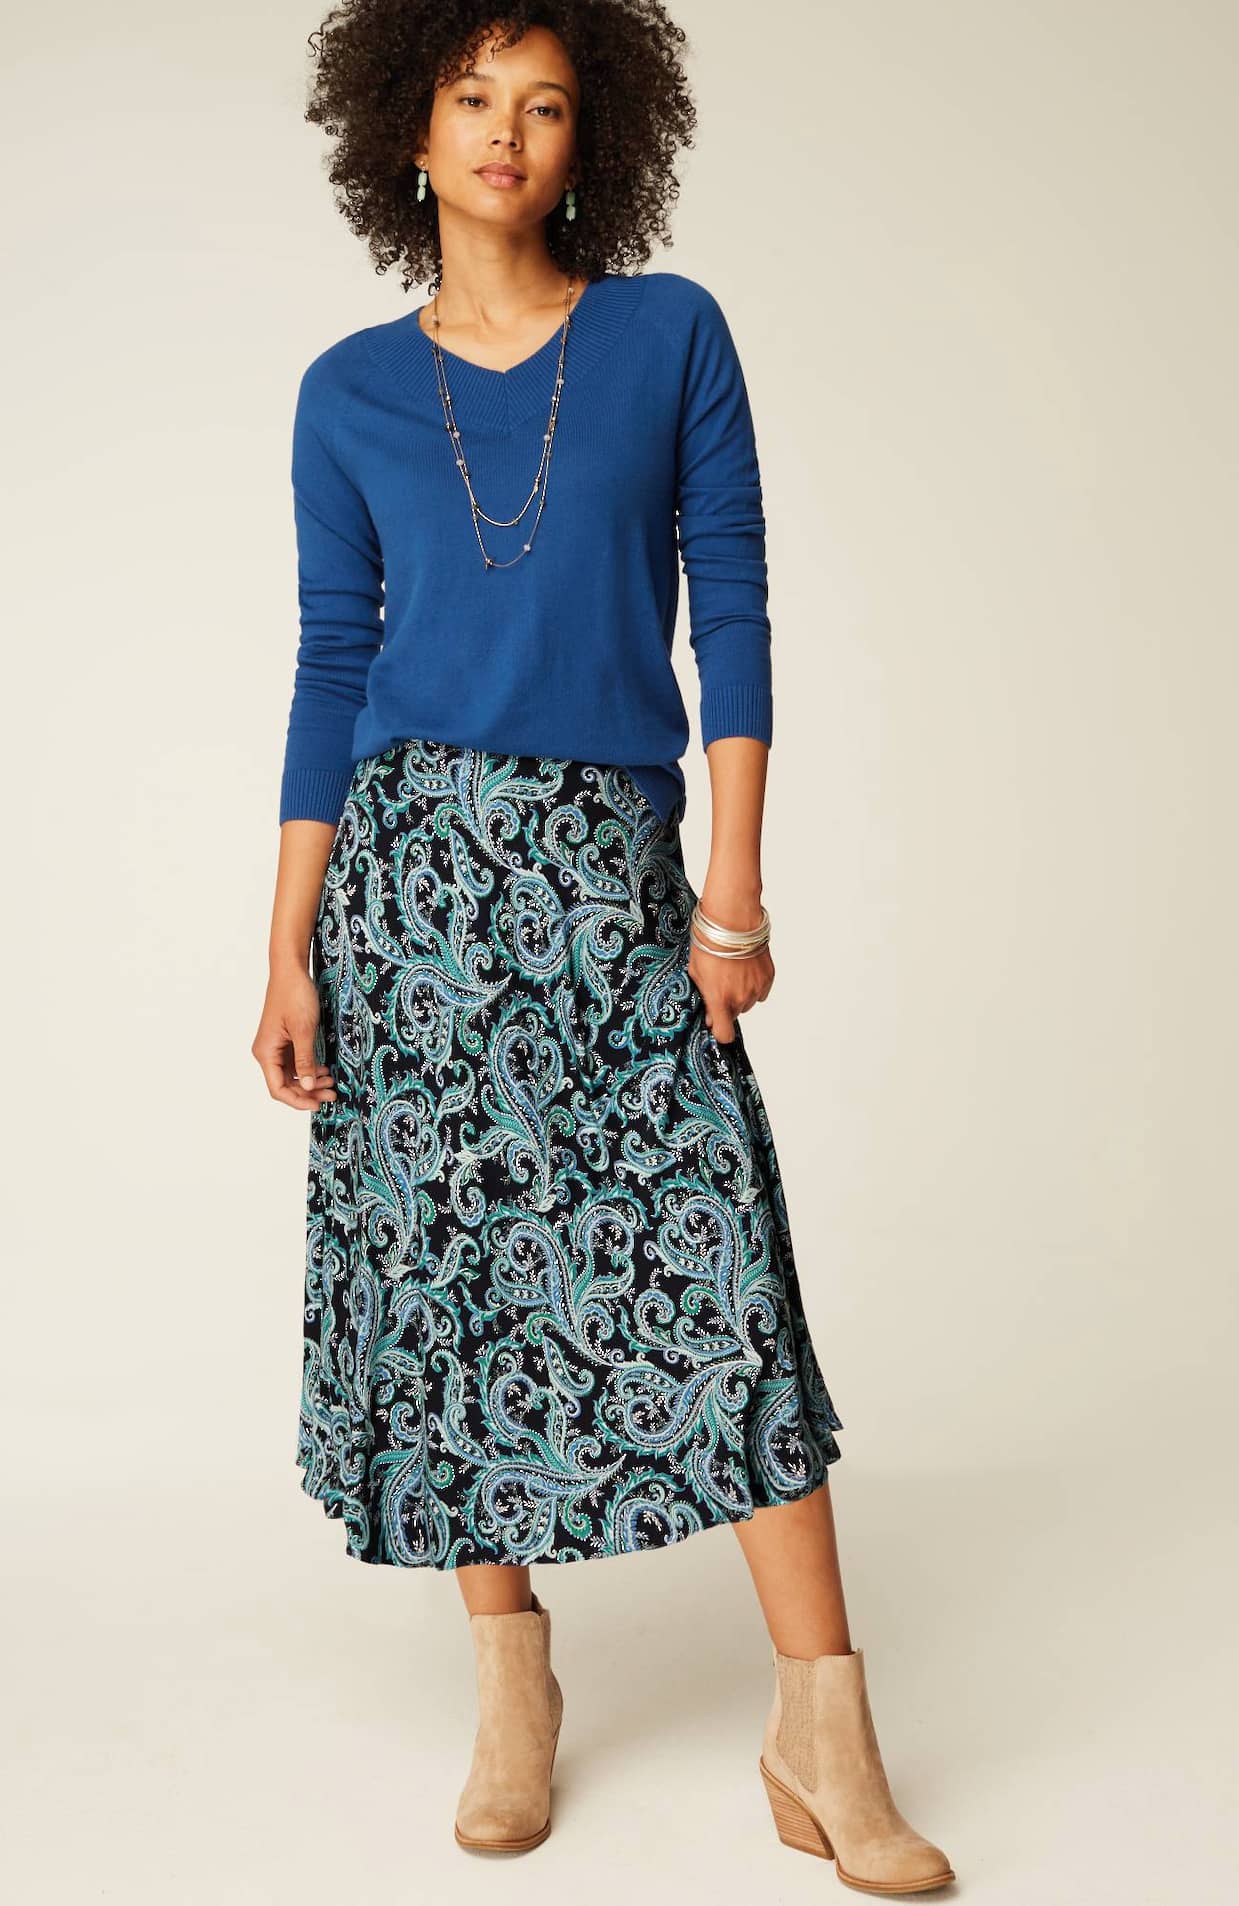 J.Jill Small Layered A Line Skirt 100% Cotton Light Blue w/ Paisley Print